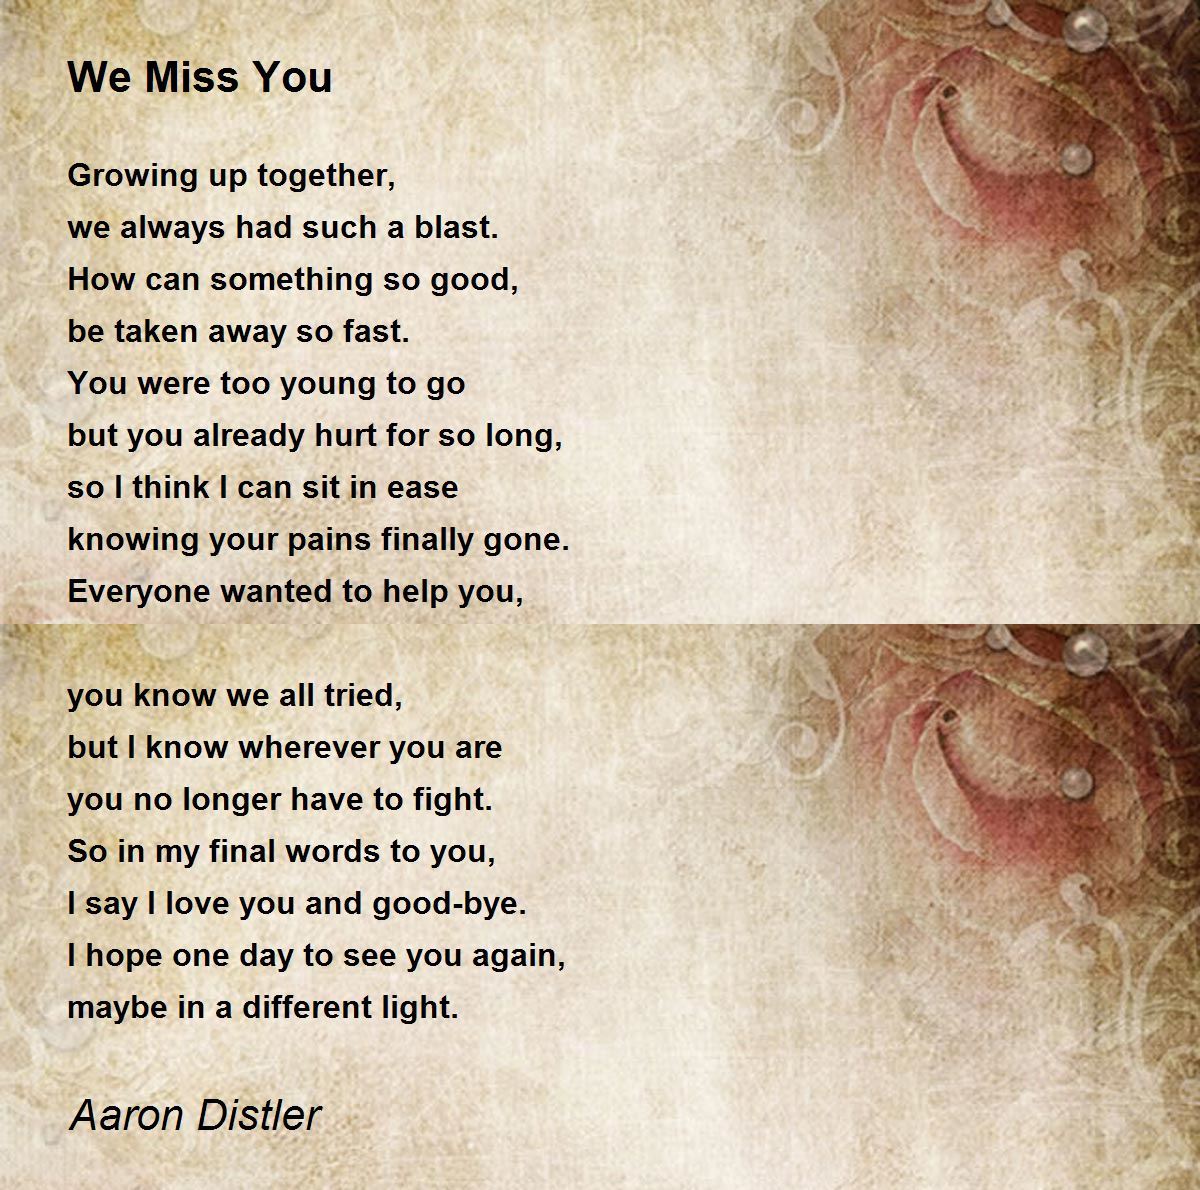 We miss you poem